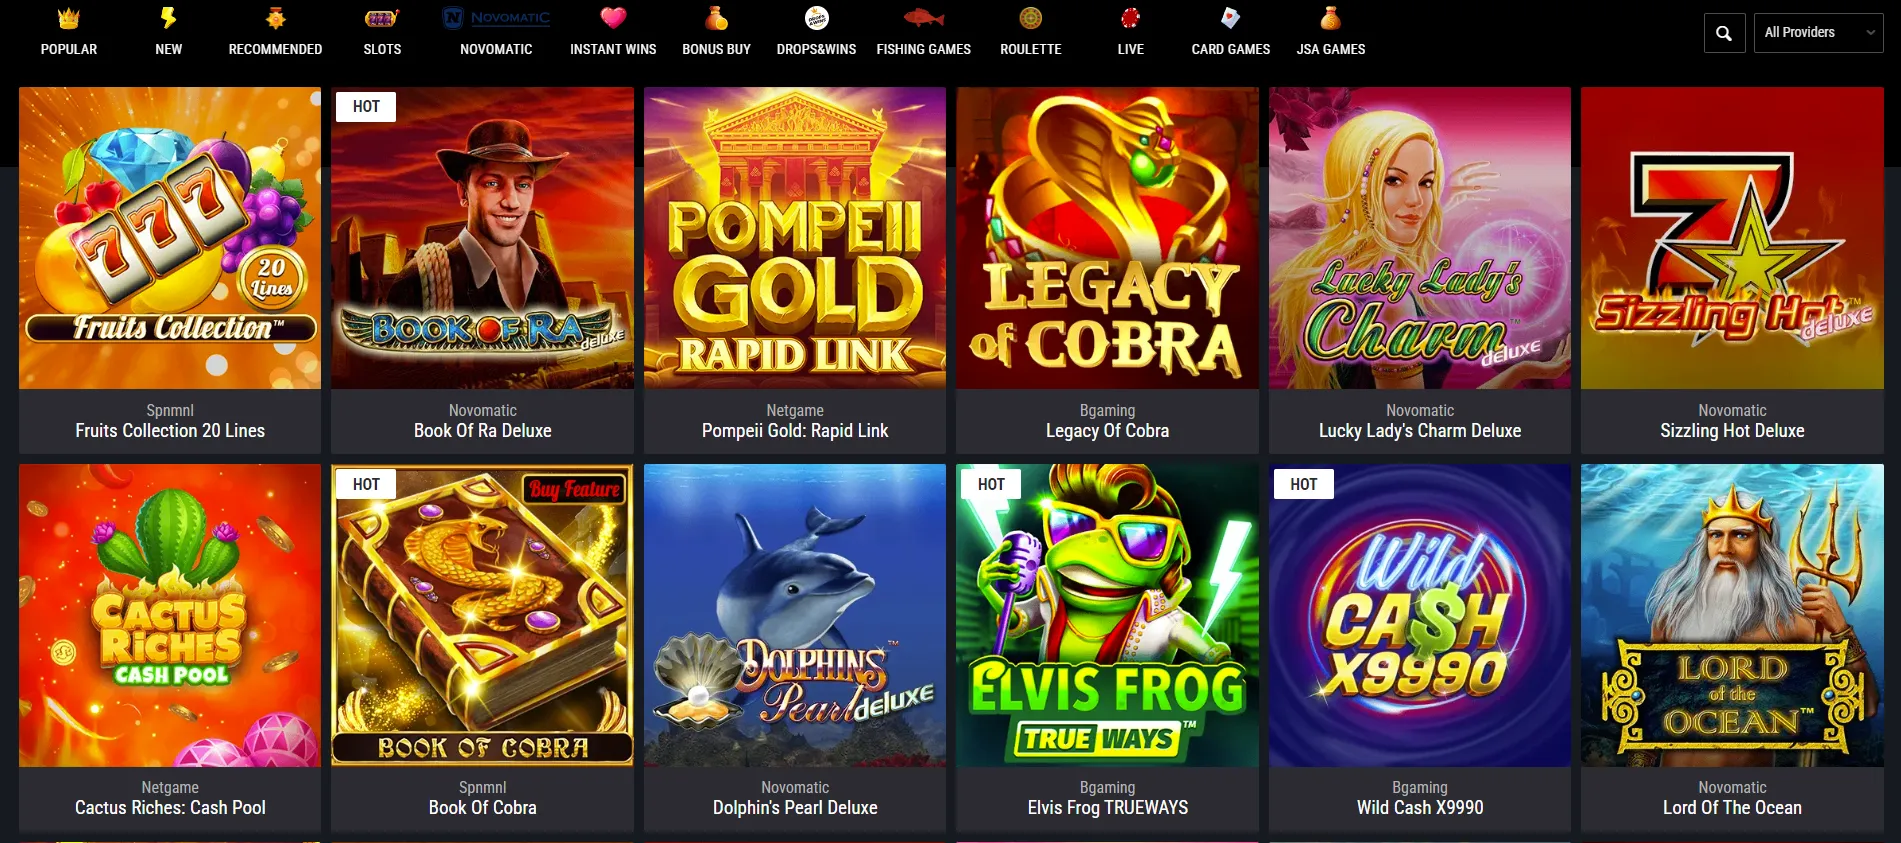 Cobra Casino Games